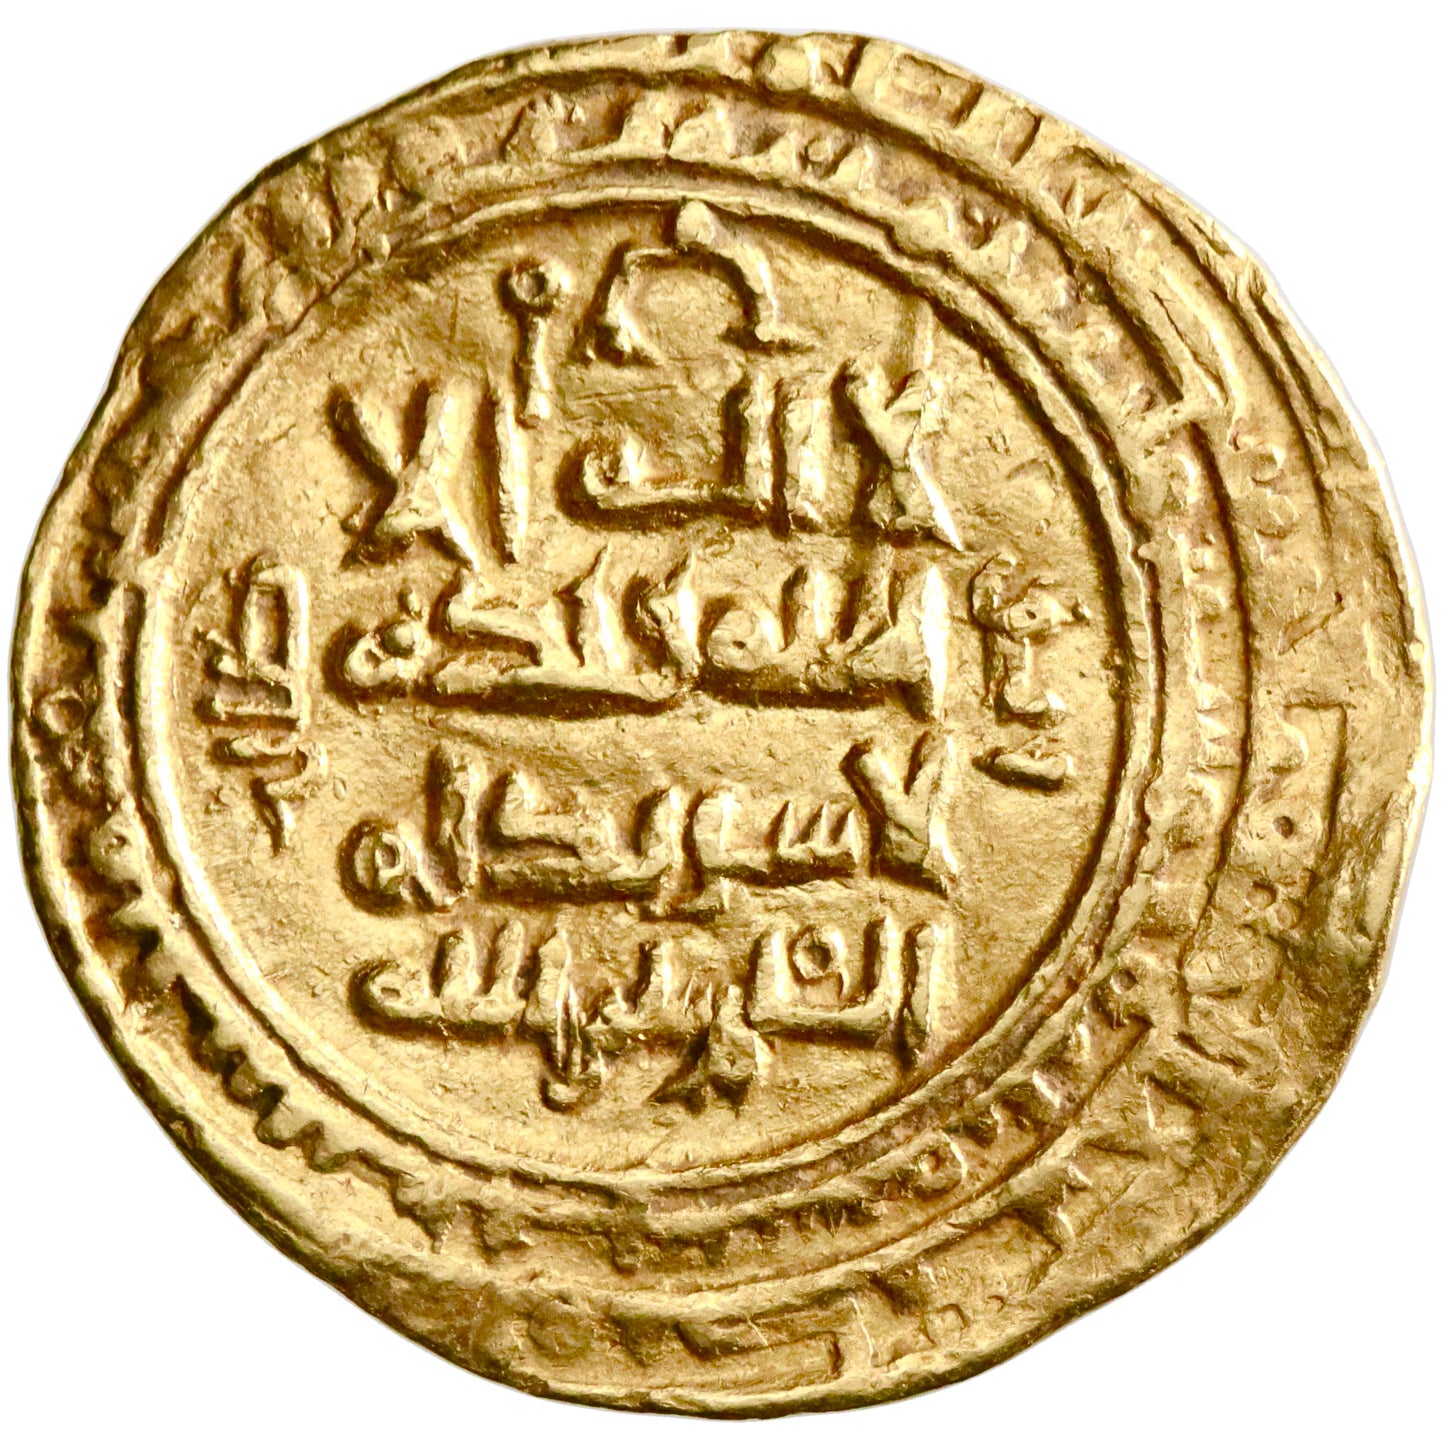 Great Seljuq, Tughril Beg, gold dinar, Naysabur (Nishapur) mint, AH 453, citing al-Qa'im and Tughril Beg